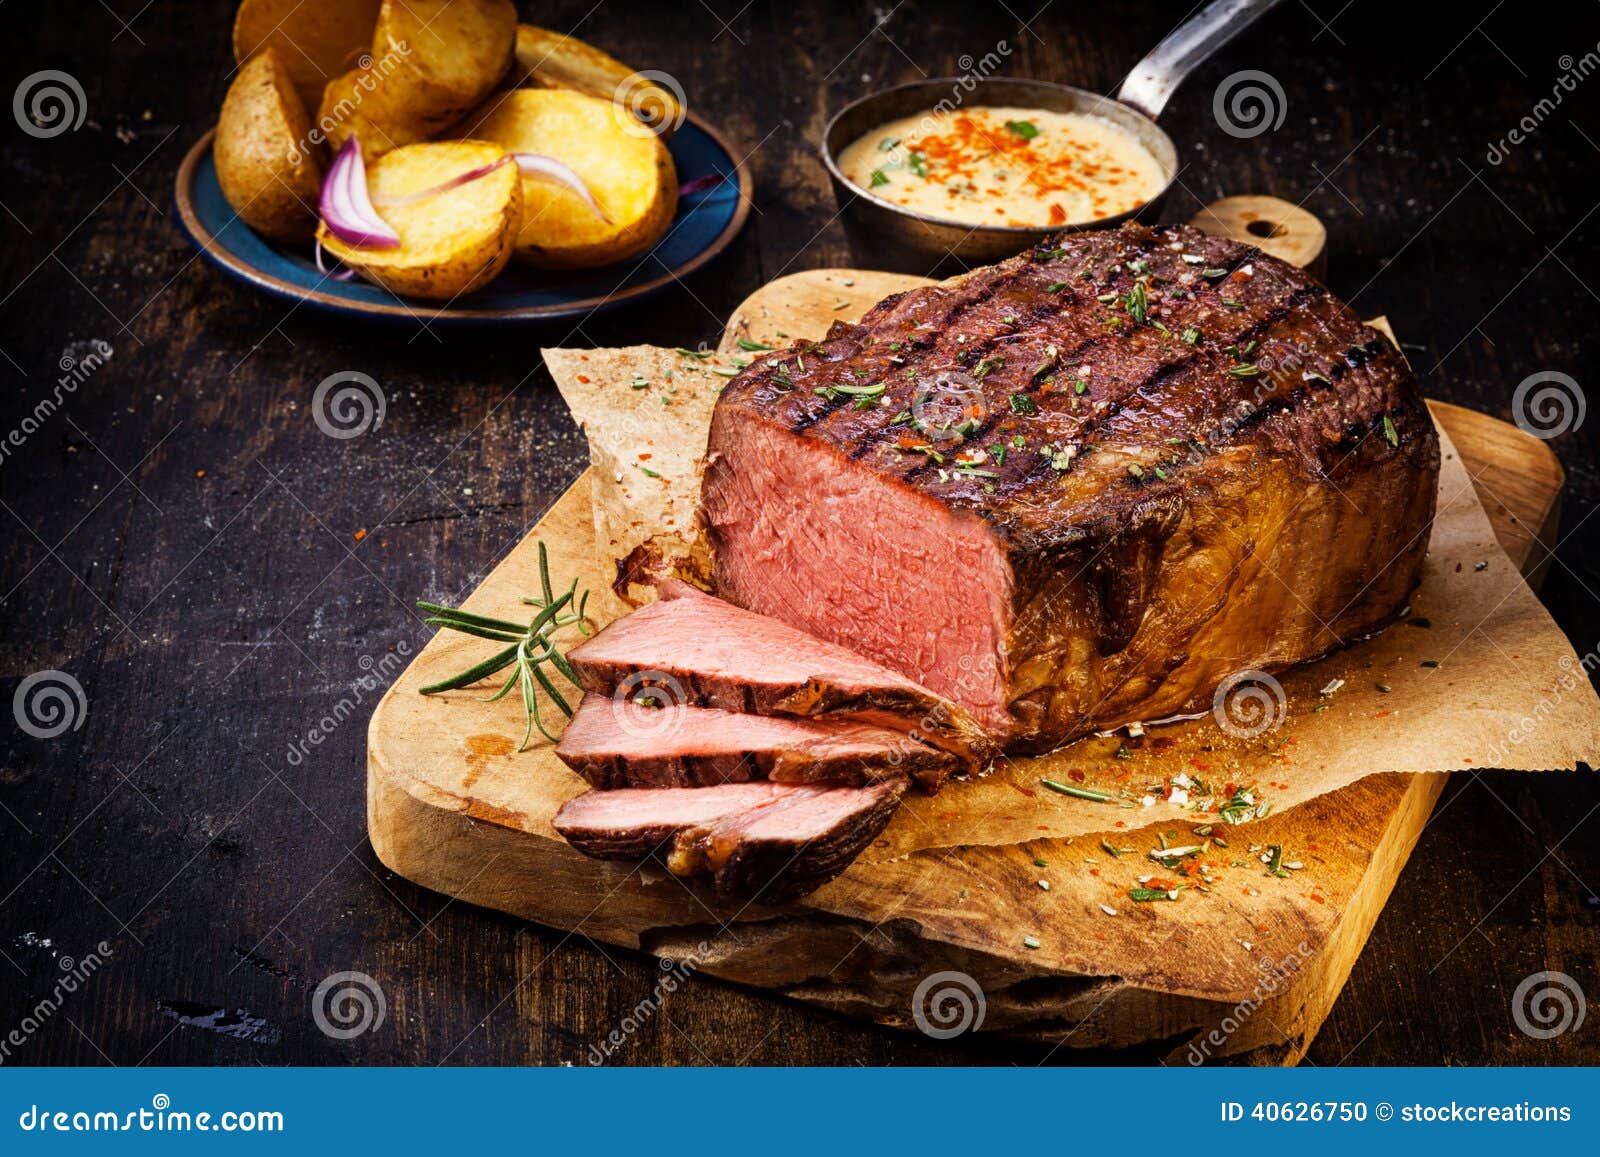 delicious lean rare roast beef